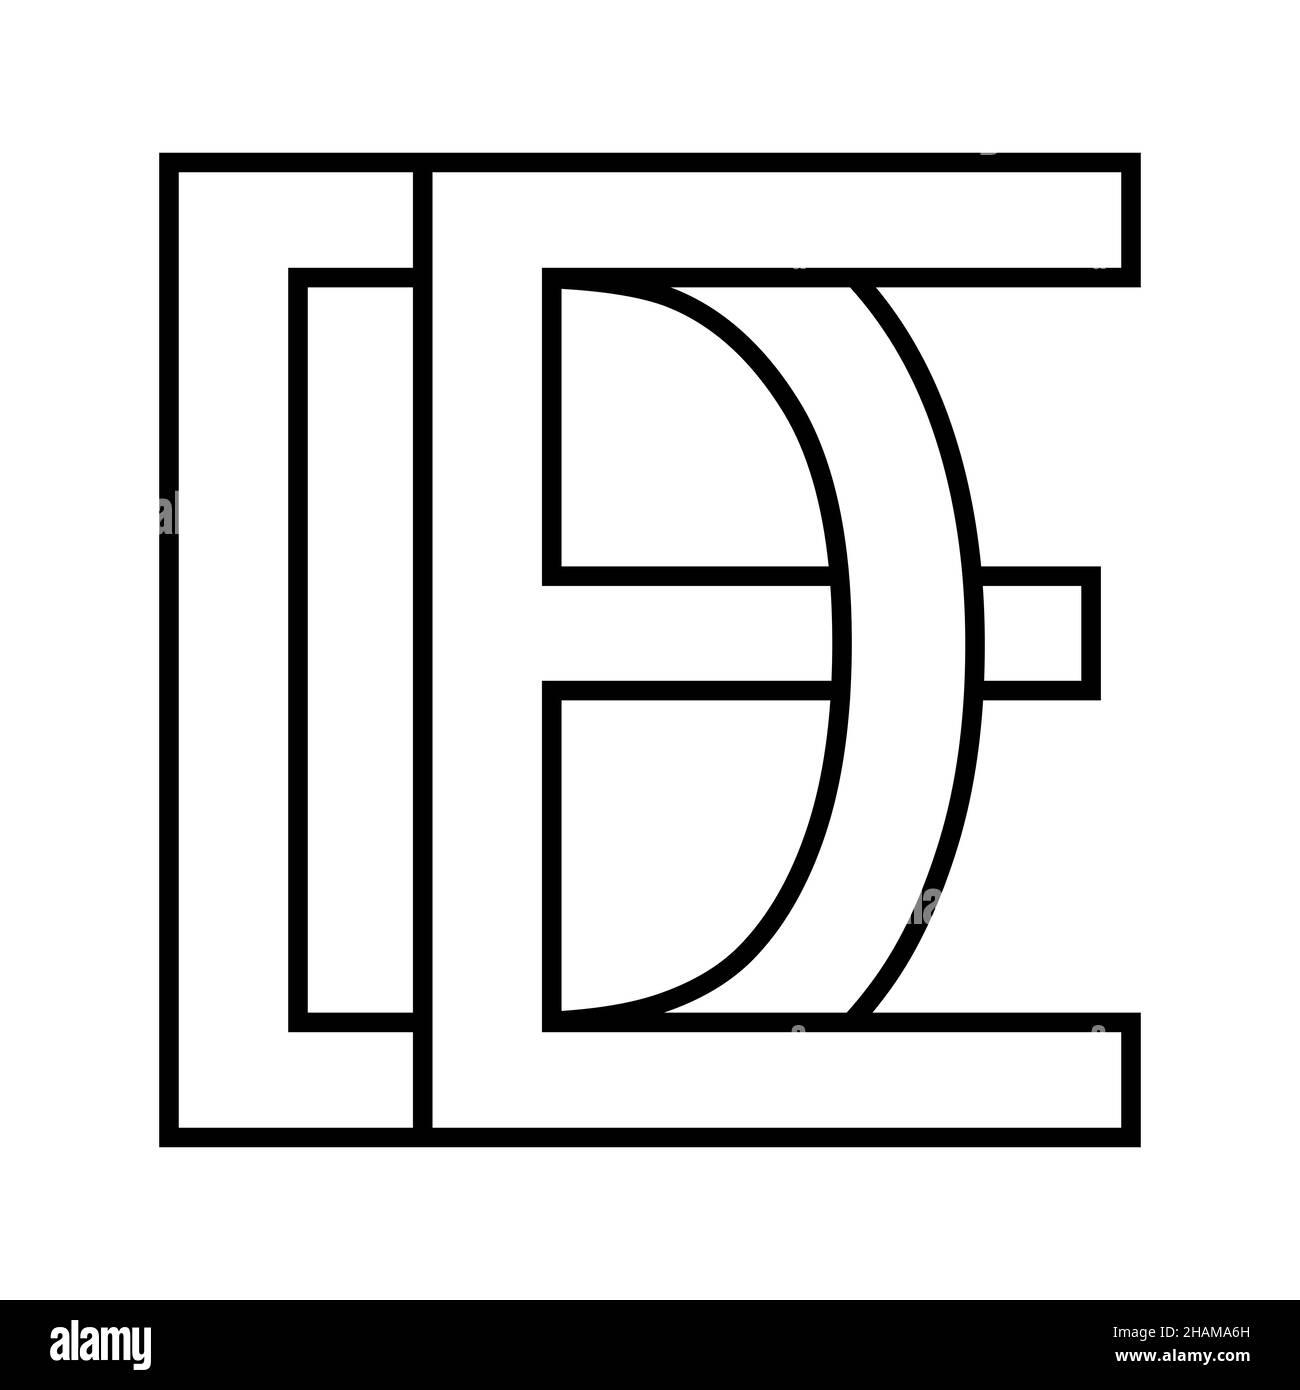 Logo sign de ed icon sign interlaced, letters d e Stock Vector